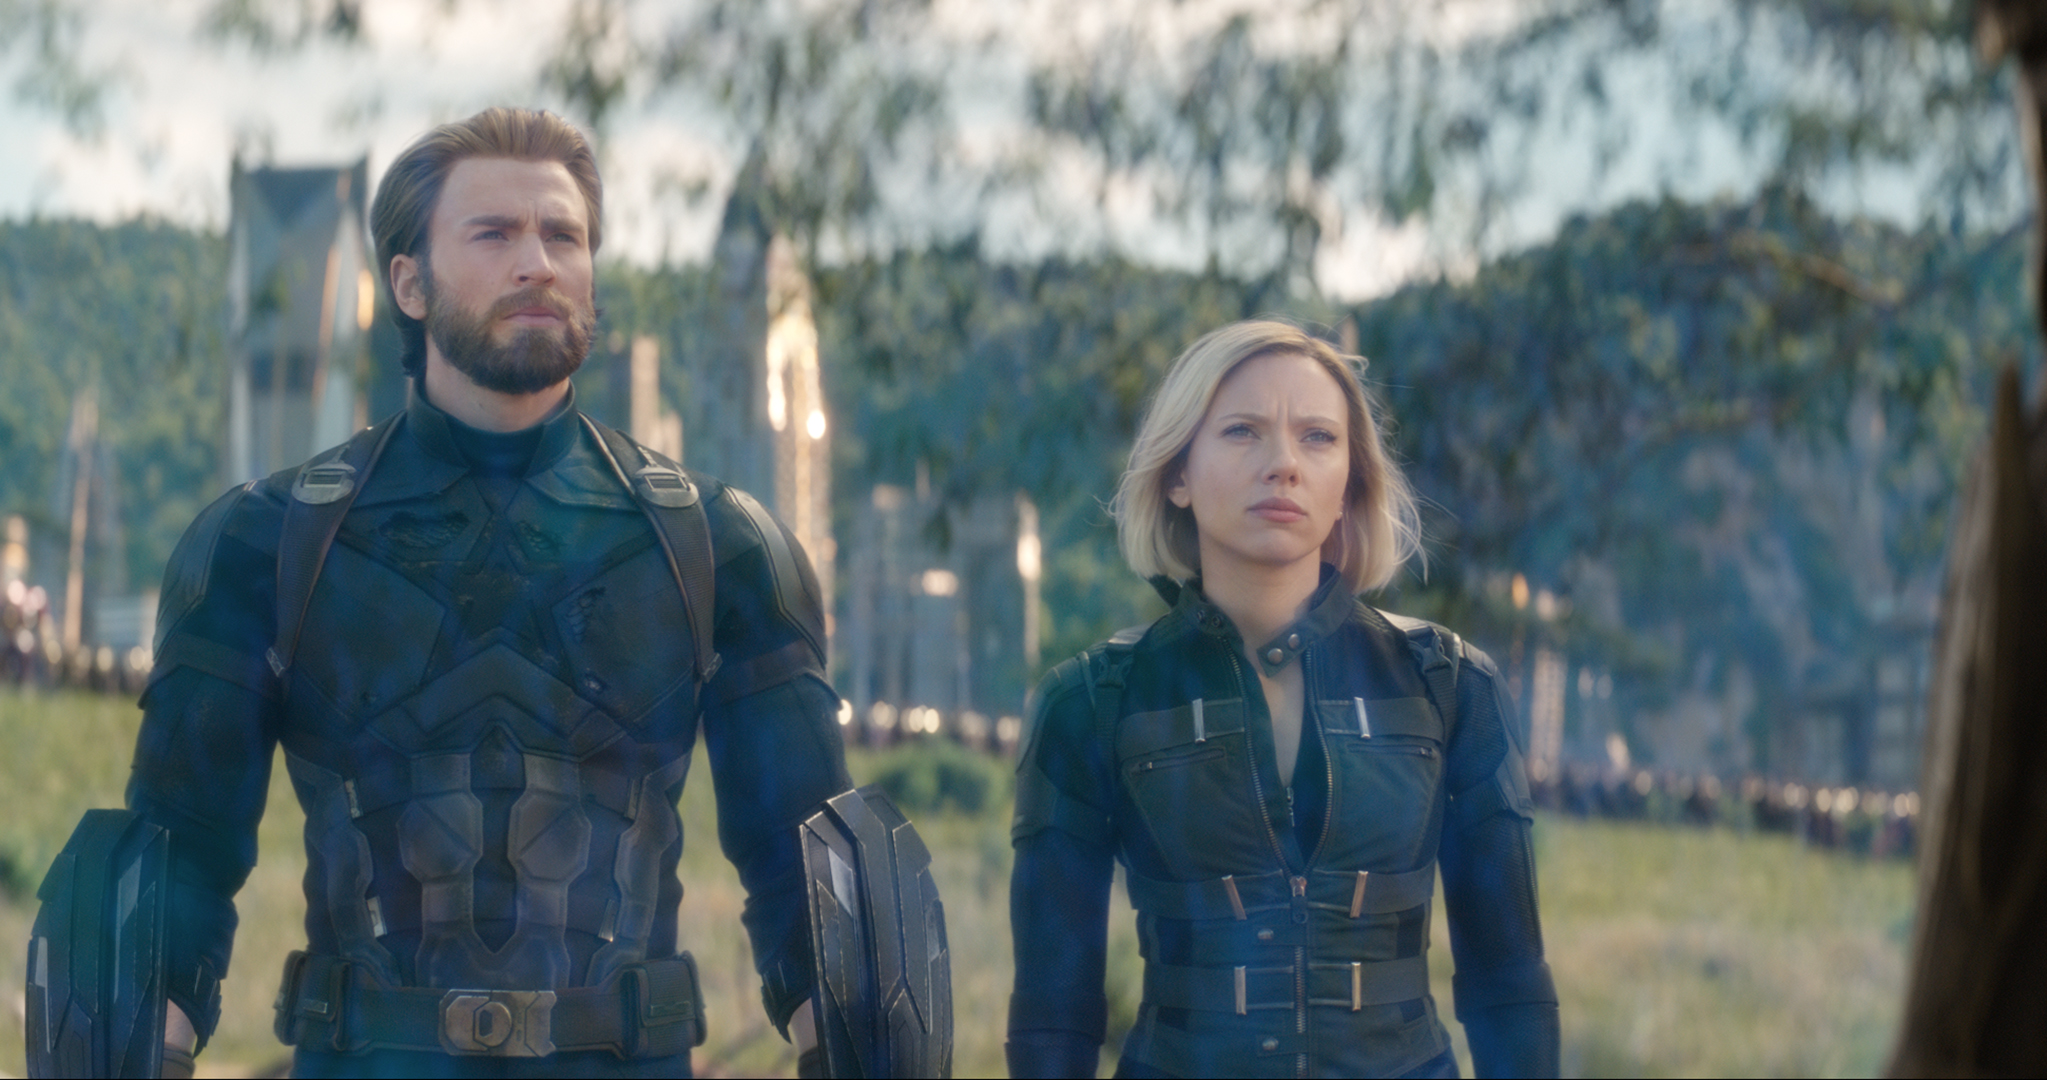 Chris Evans as Captain America and Scarlett Johansson as Black Widow in Avengers: Infinity War